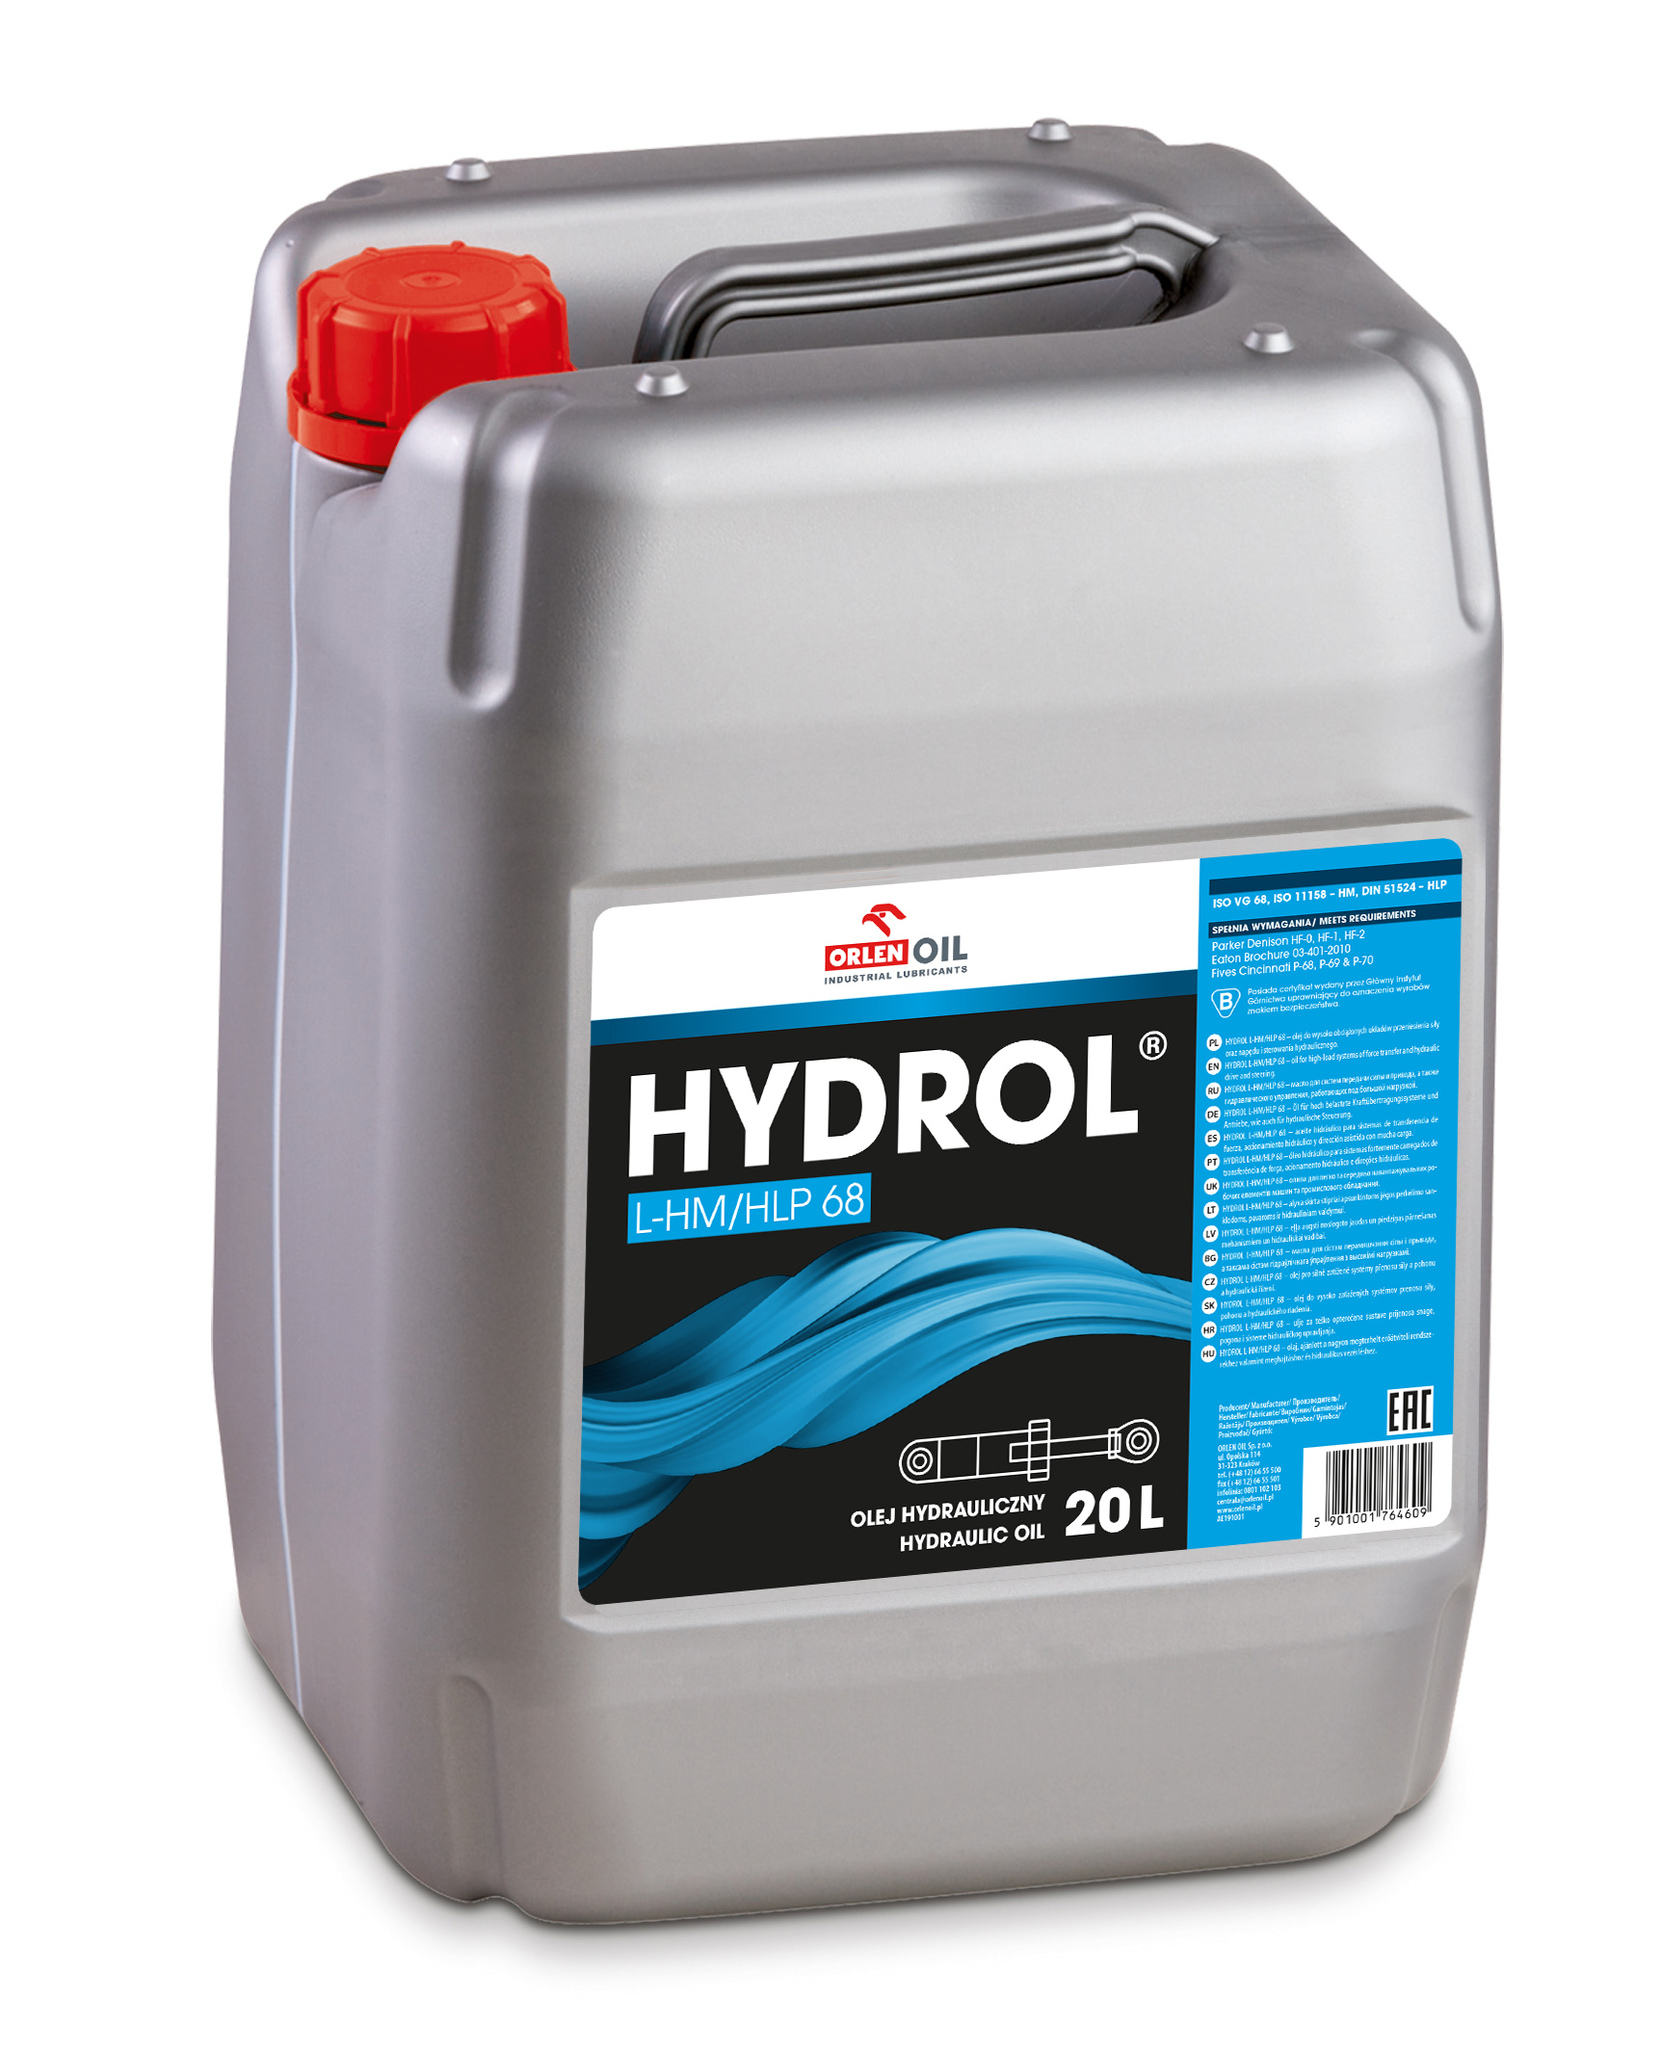 OrlenOil Hydrol L-HM/HLP 68 Гидравлическое масло